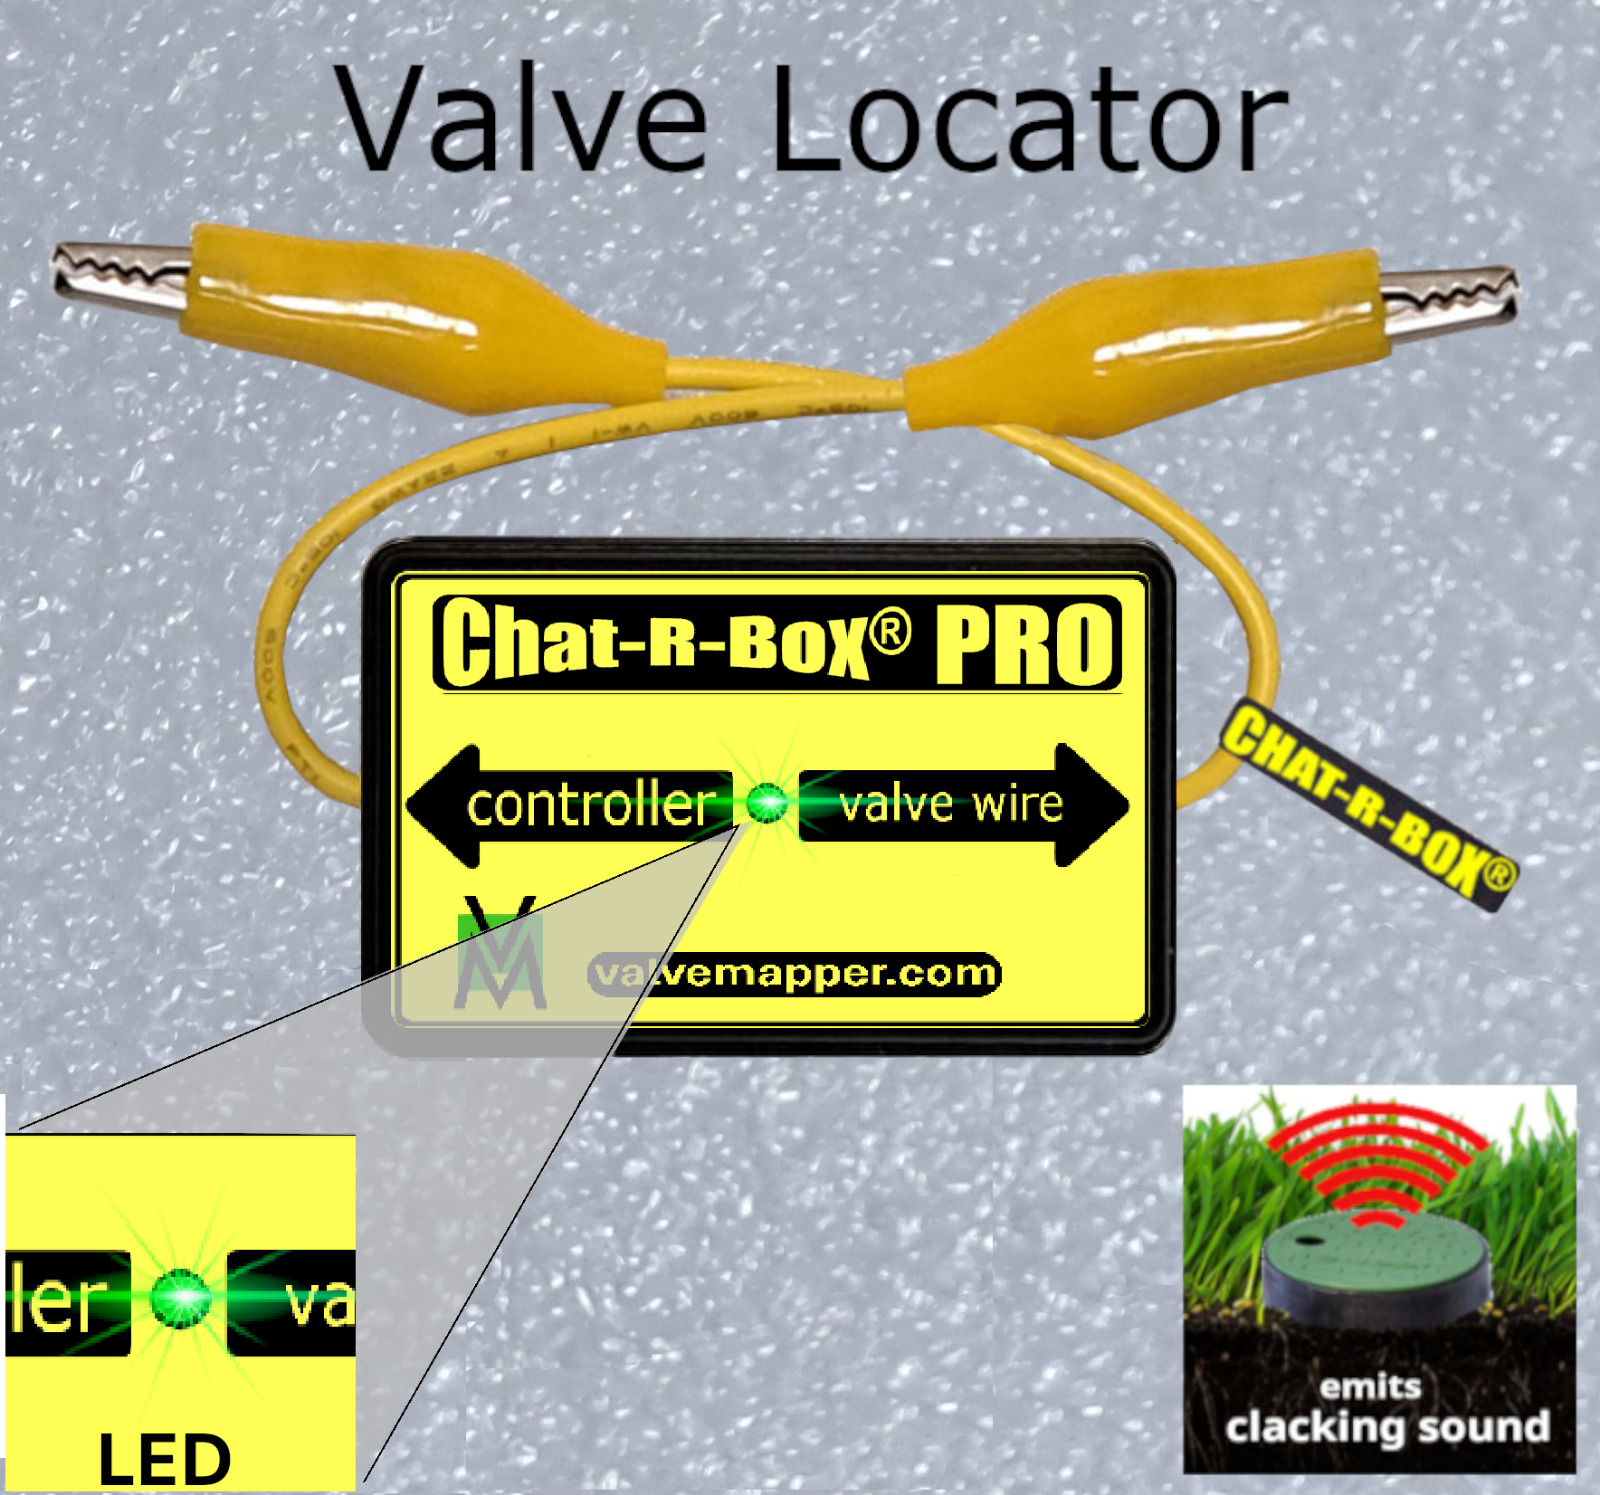 ✅Lawn Valve Locator Chat-R-Box® Pro w/LED, Valve Finder, find lost valves